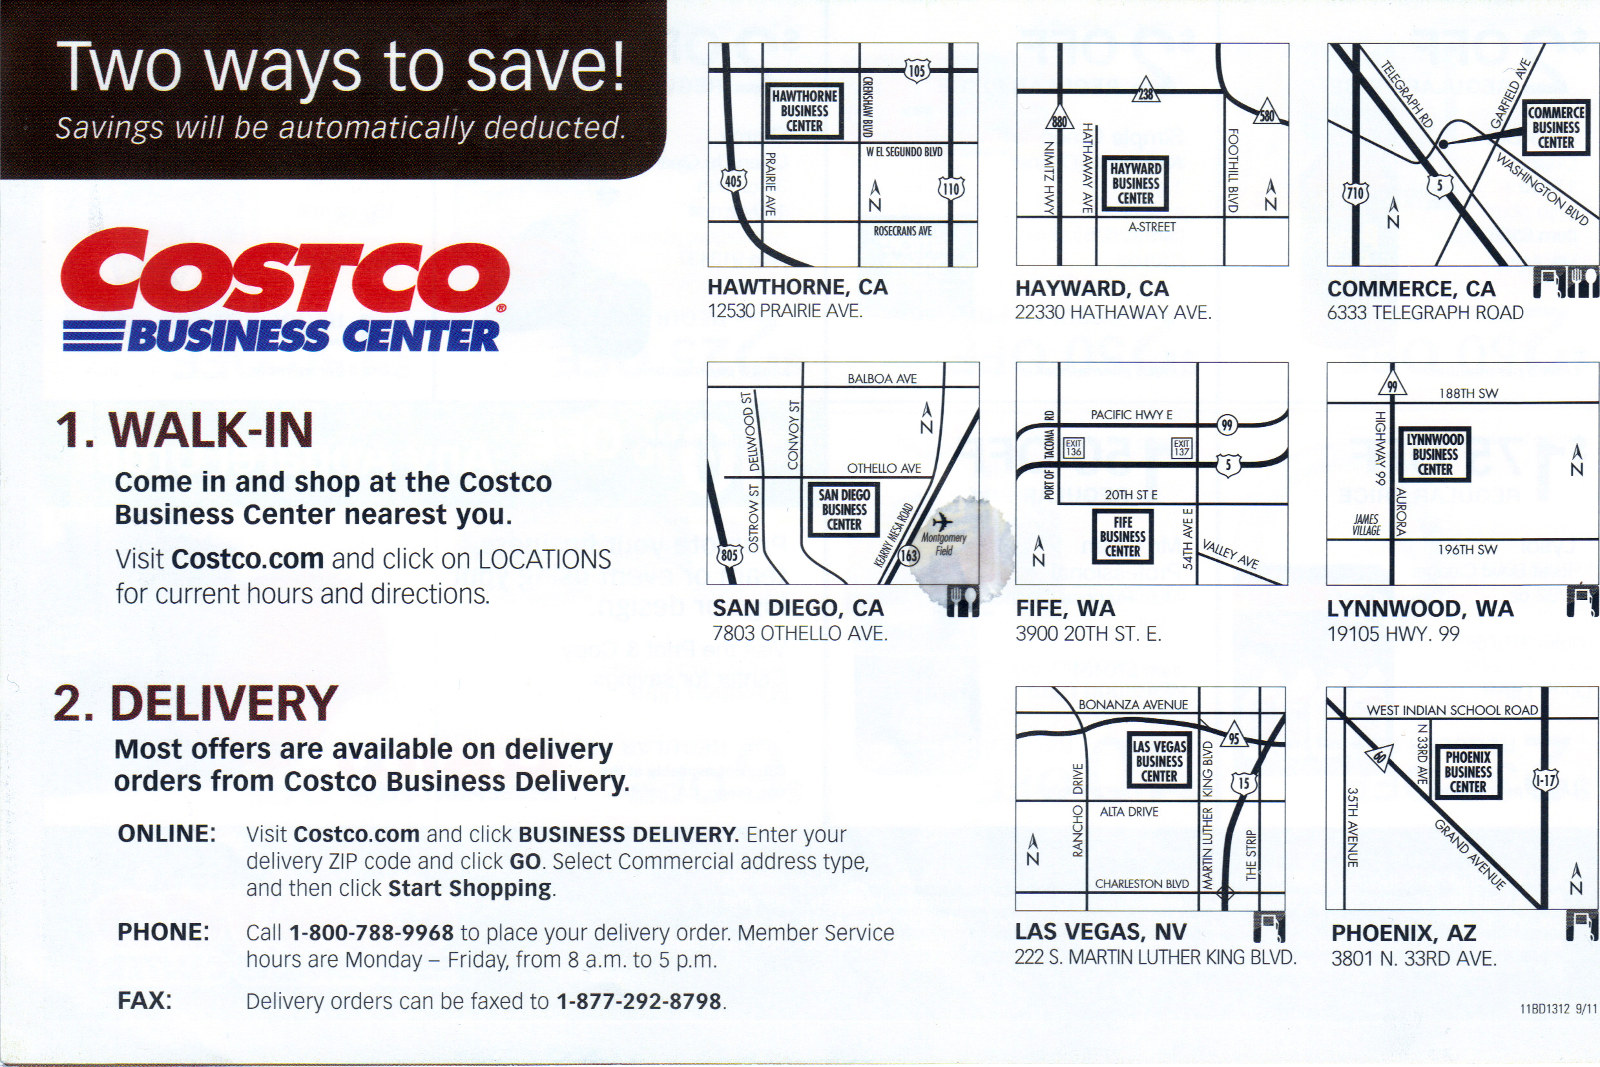 Costco Business Center Discounts-> 4 <-